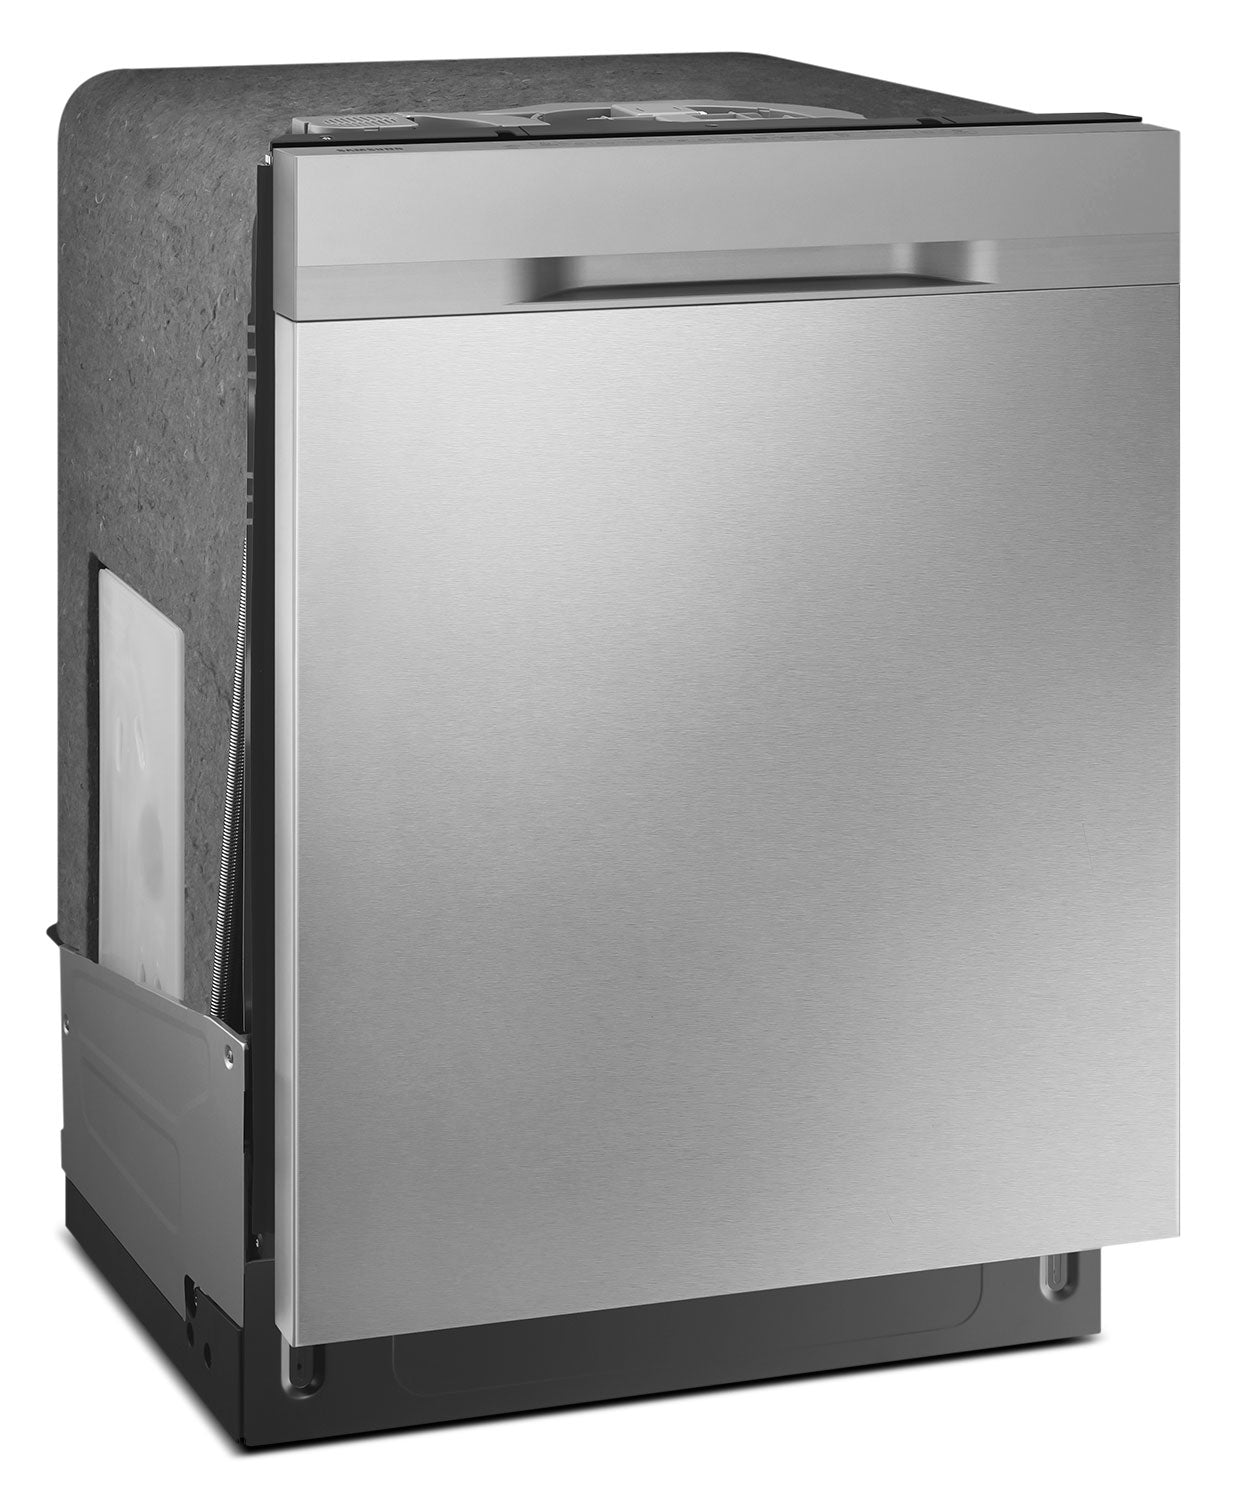 Samsung Stainless Steel 24" Dishwasher - DW80K5050US/AC